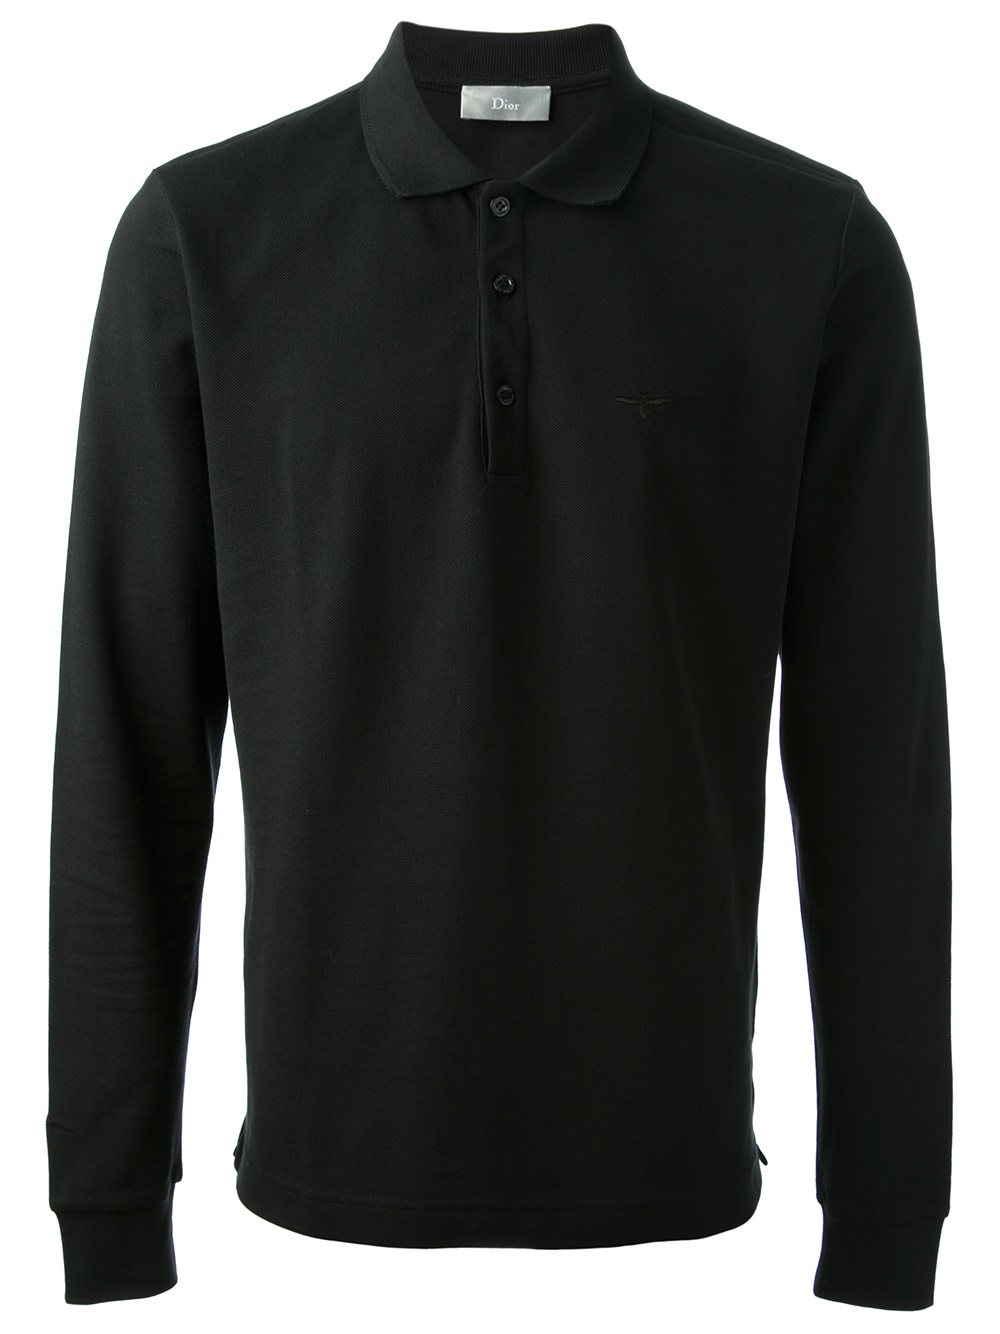 Lyst - Dior Longsleeved Polo Shirt in Black for Men